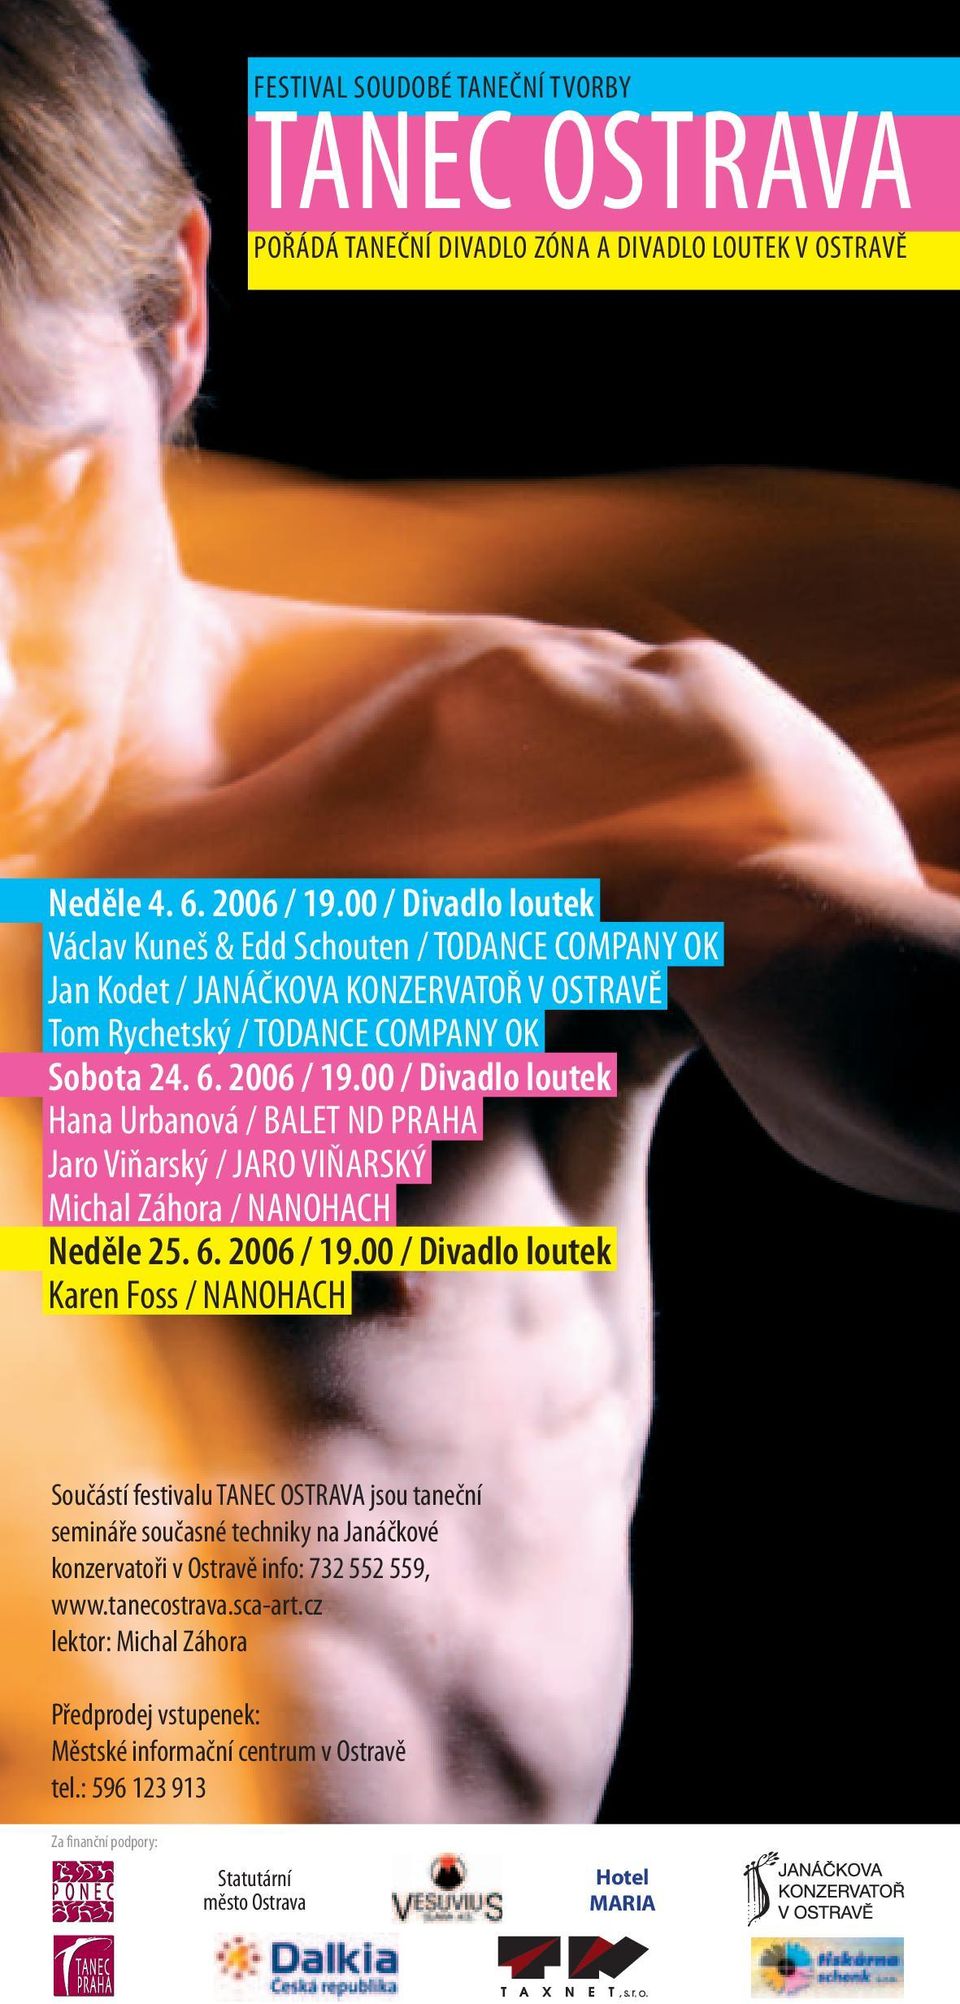 00 / Divadlo loutek Hana Urbanová / BALET ND PRAHA Jaro Viňarský / JARO VIŇARSKÝ Michal Záhora / NANOHACH Neděle 25. 6. 2006 / 19.